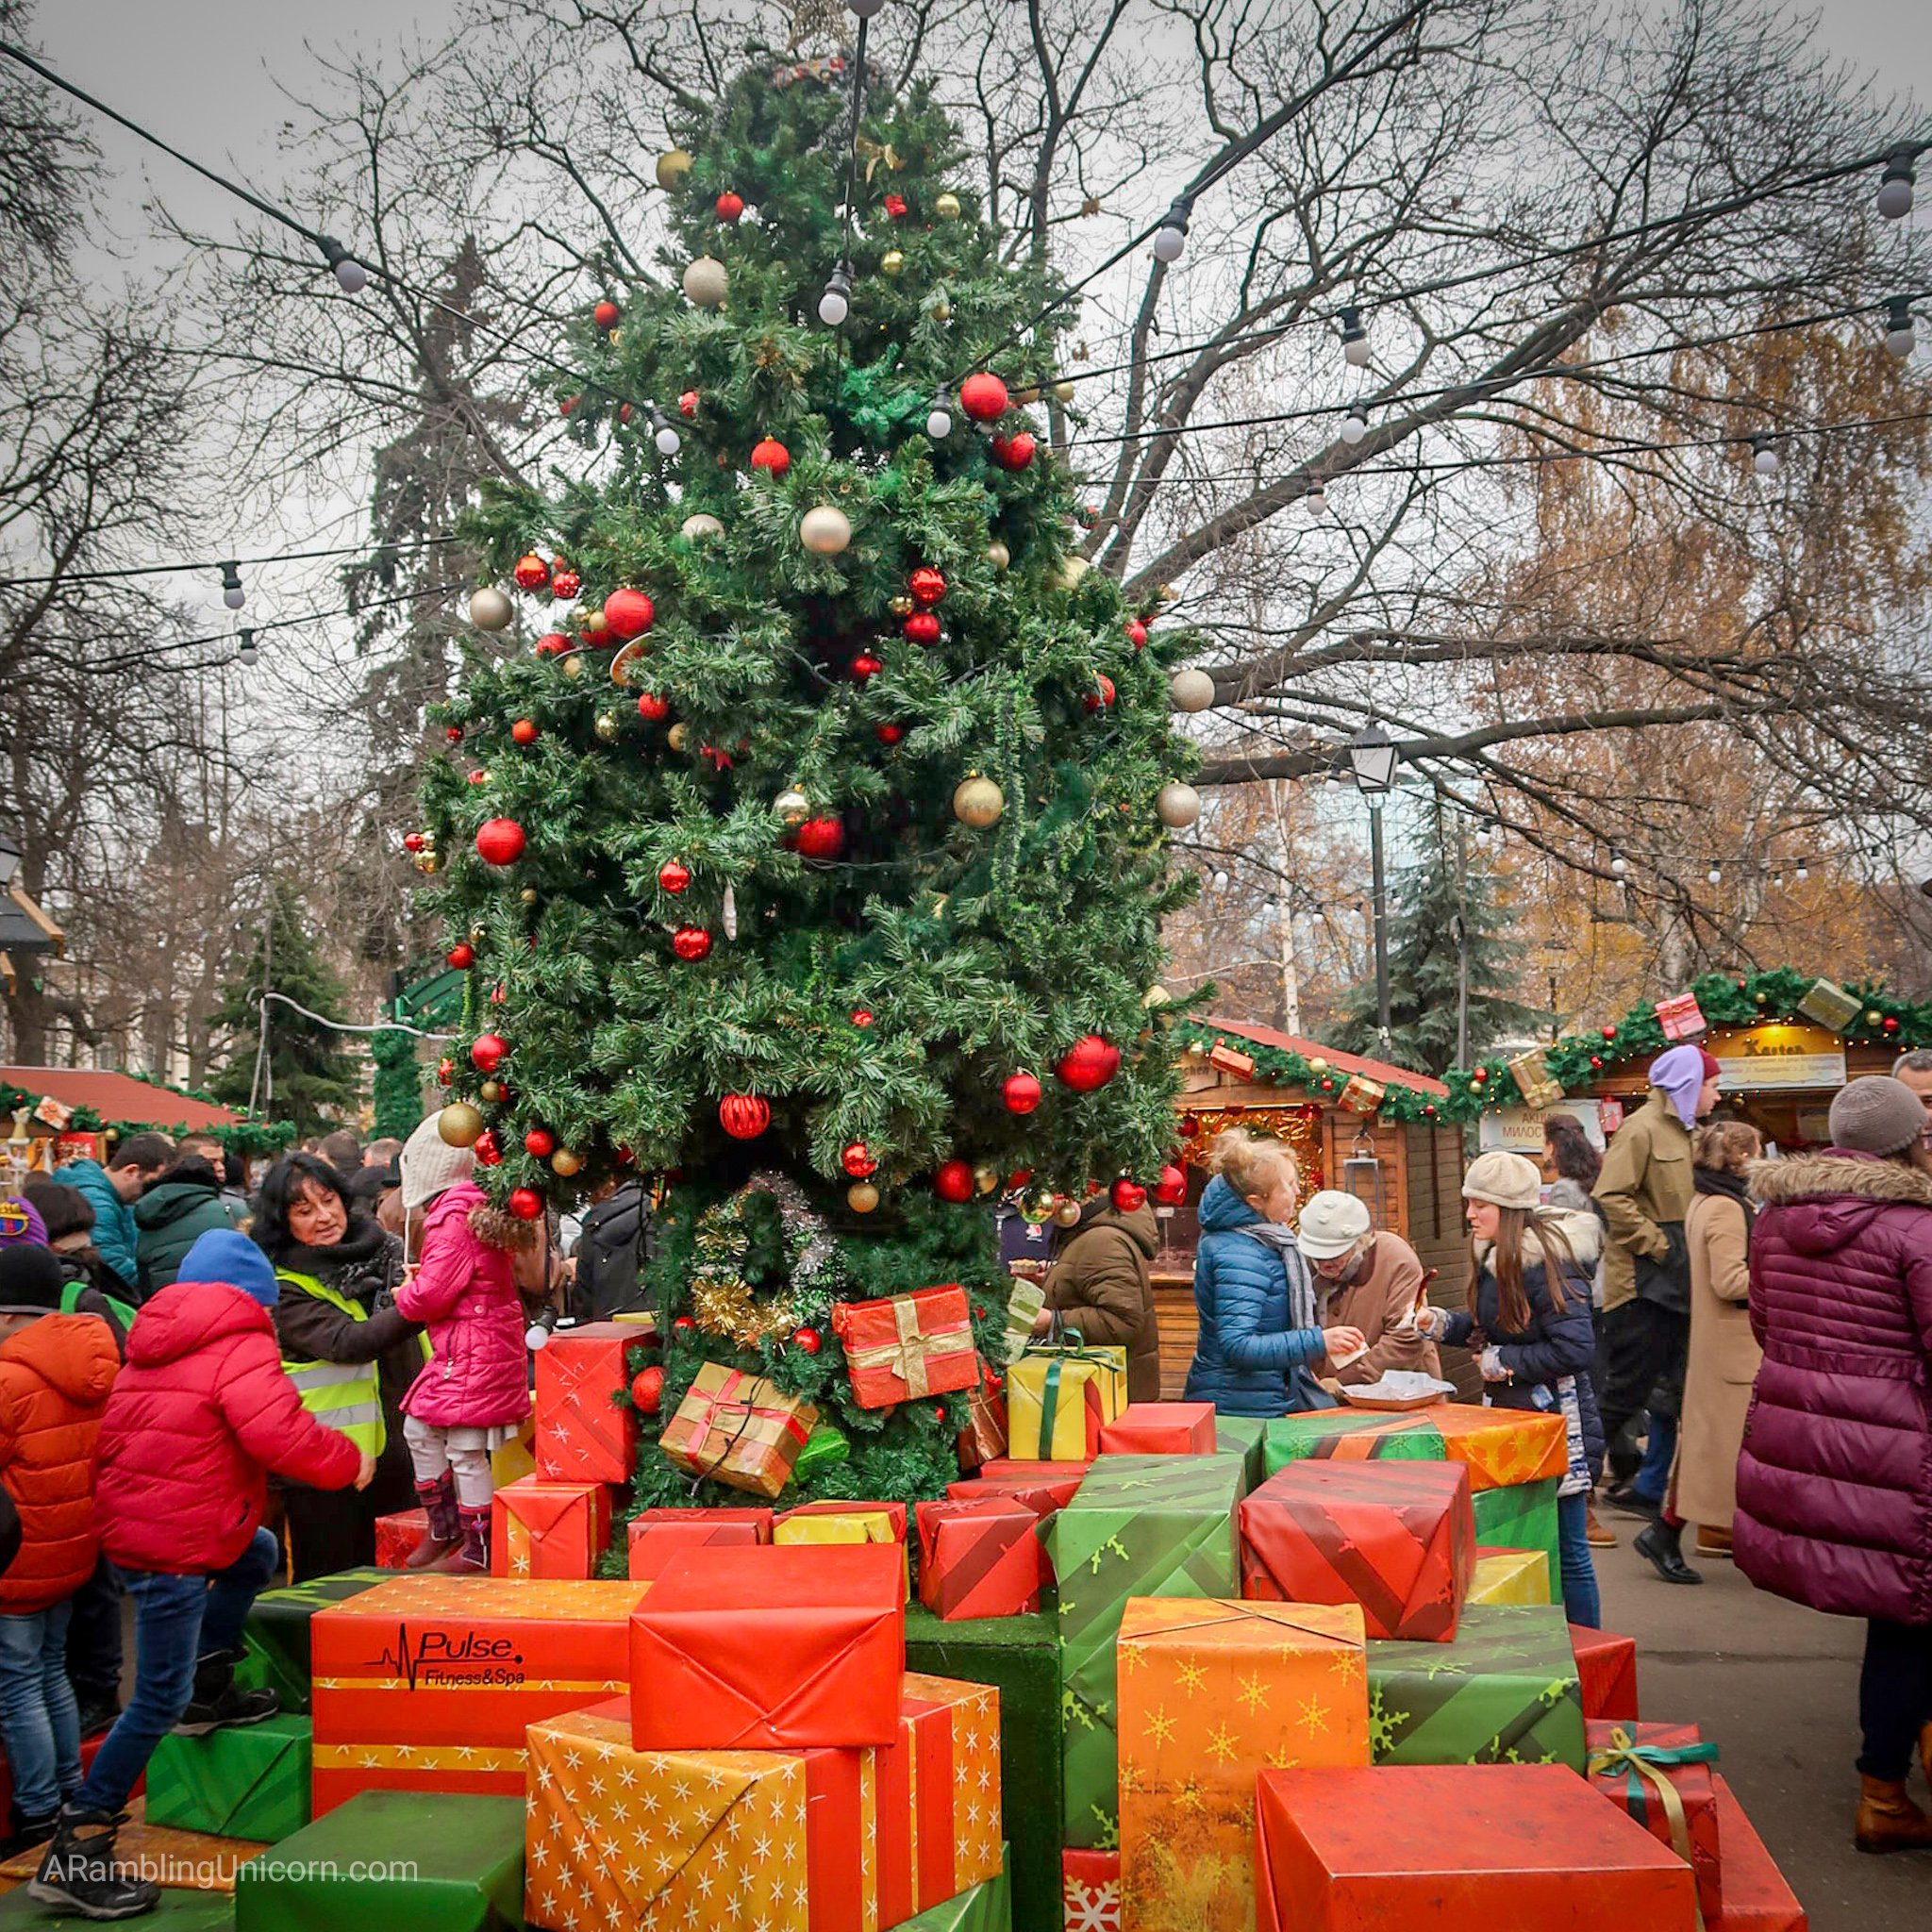 A Tour of Sofia’s Weihnachtsmarkt (German Christmas Market)